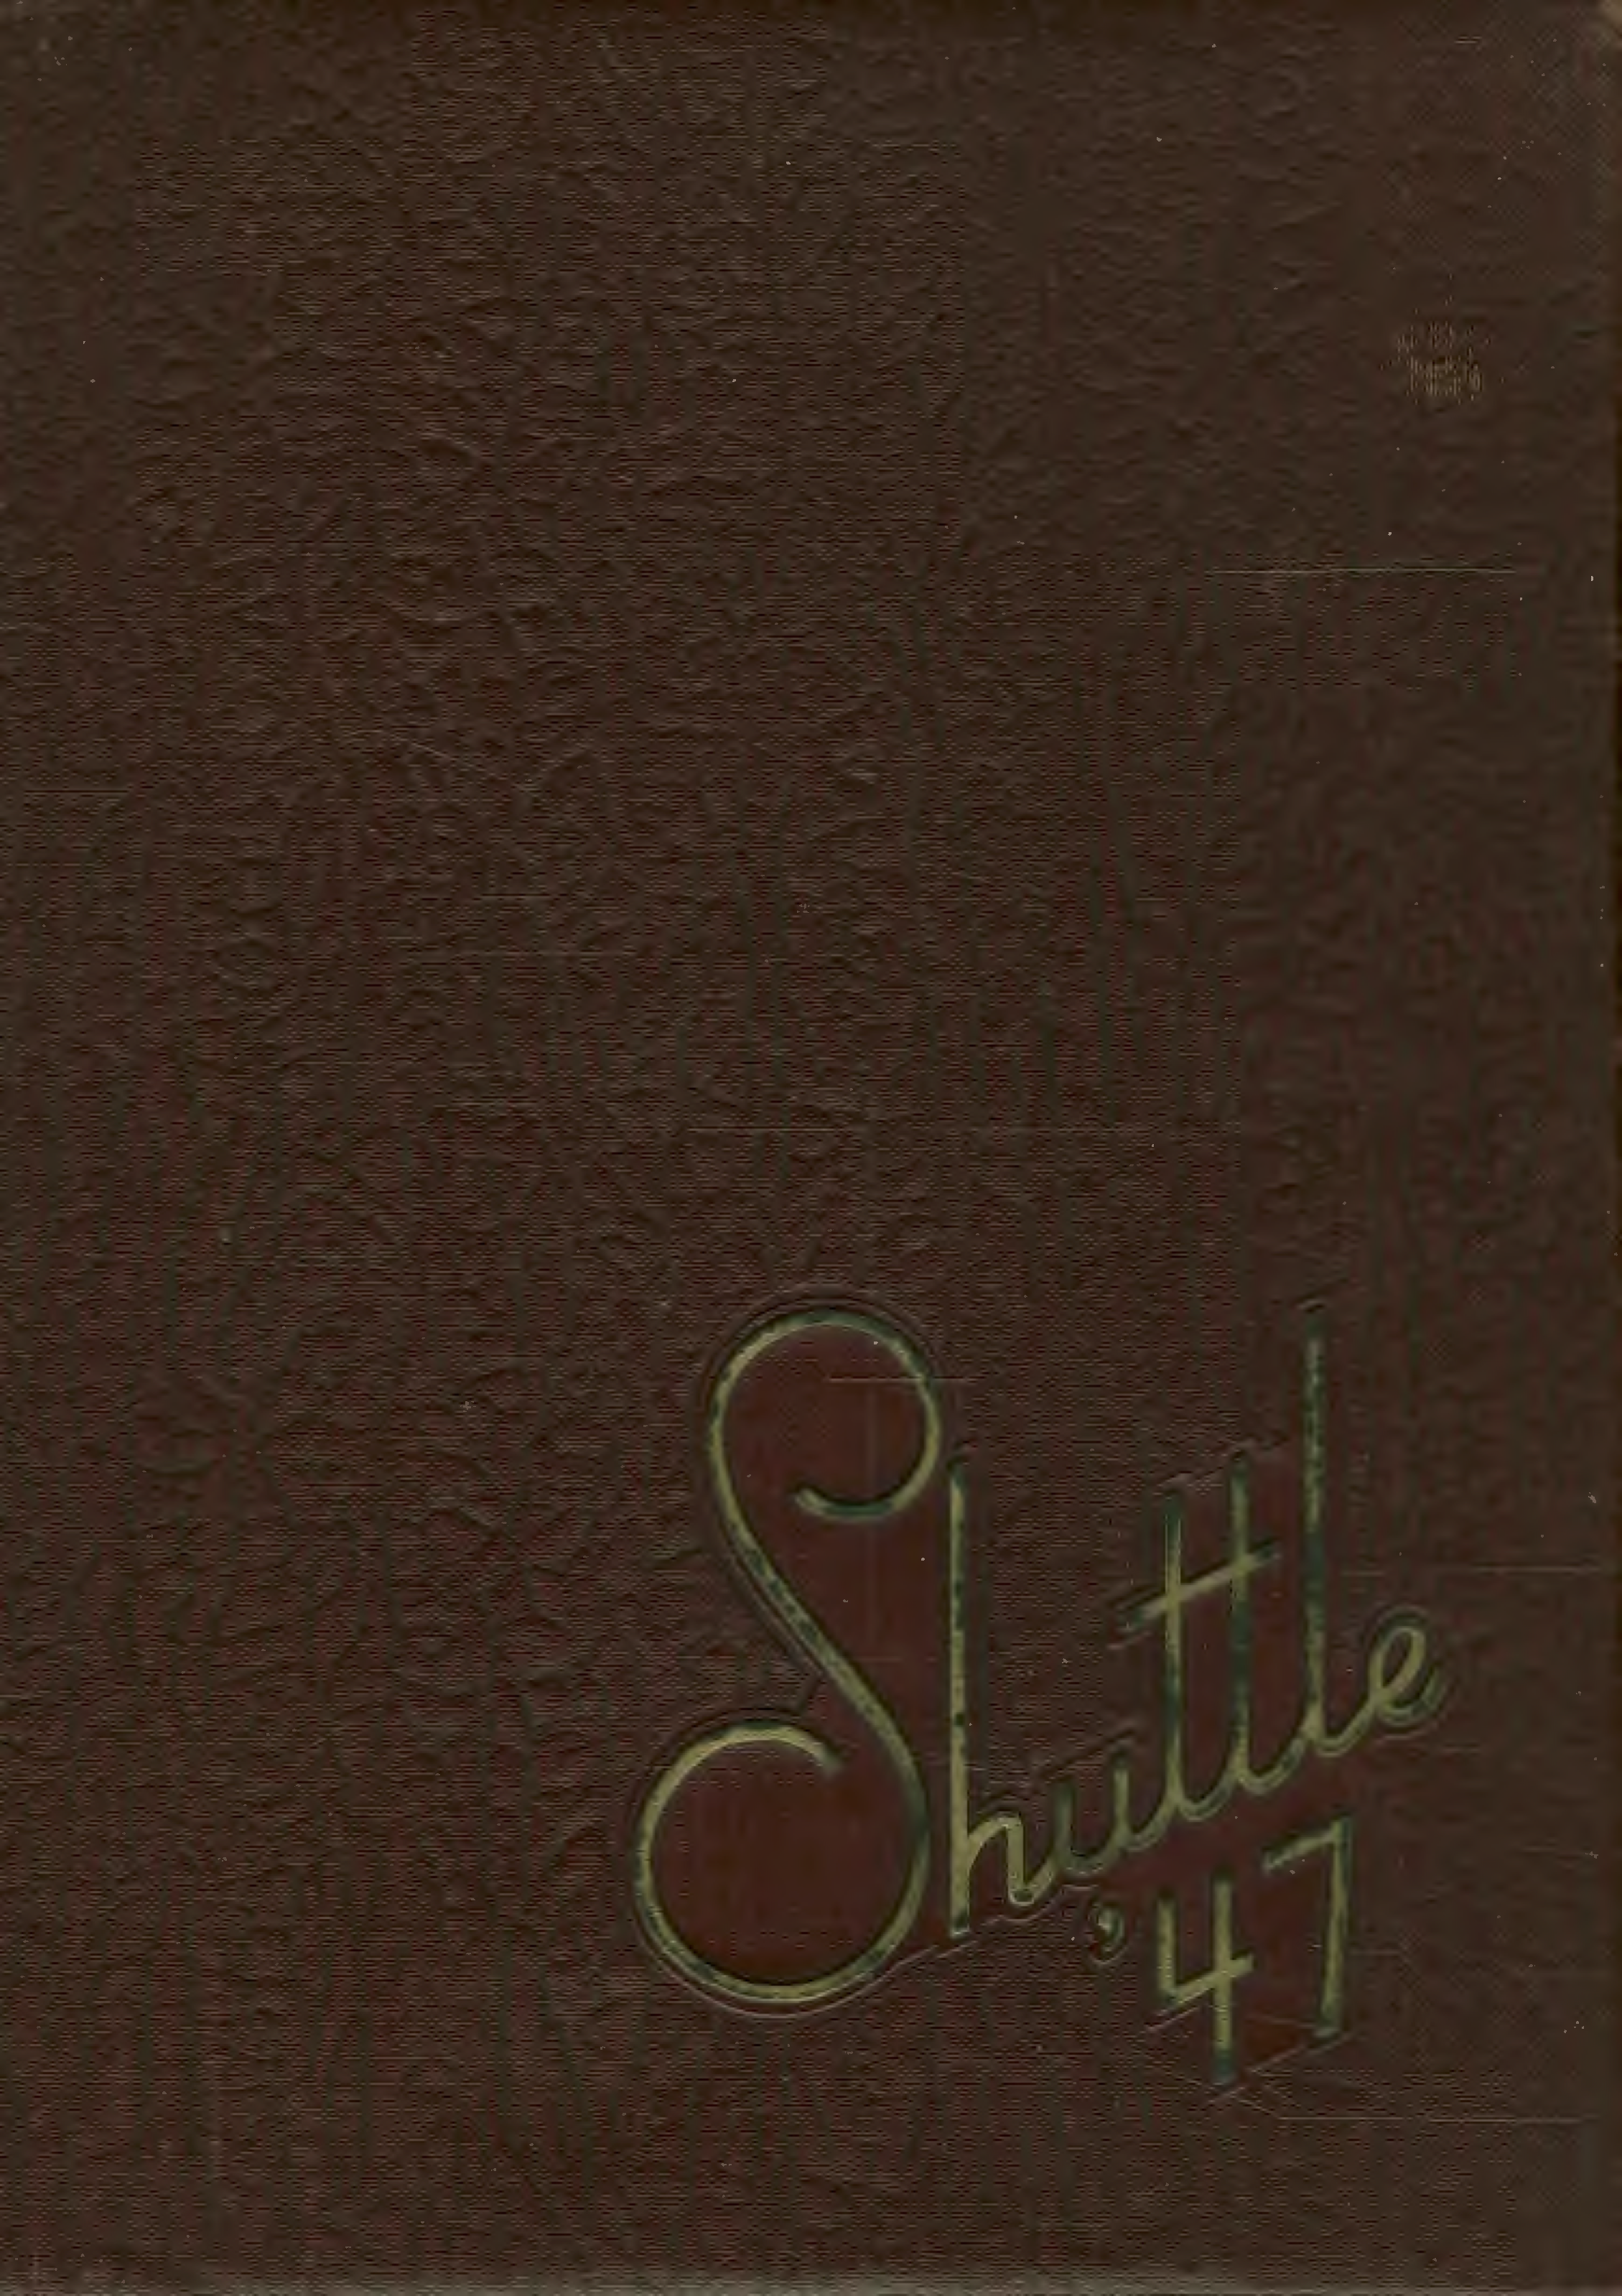 Shaw High School Yearbook 1947